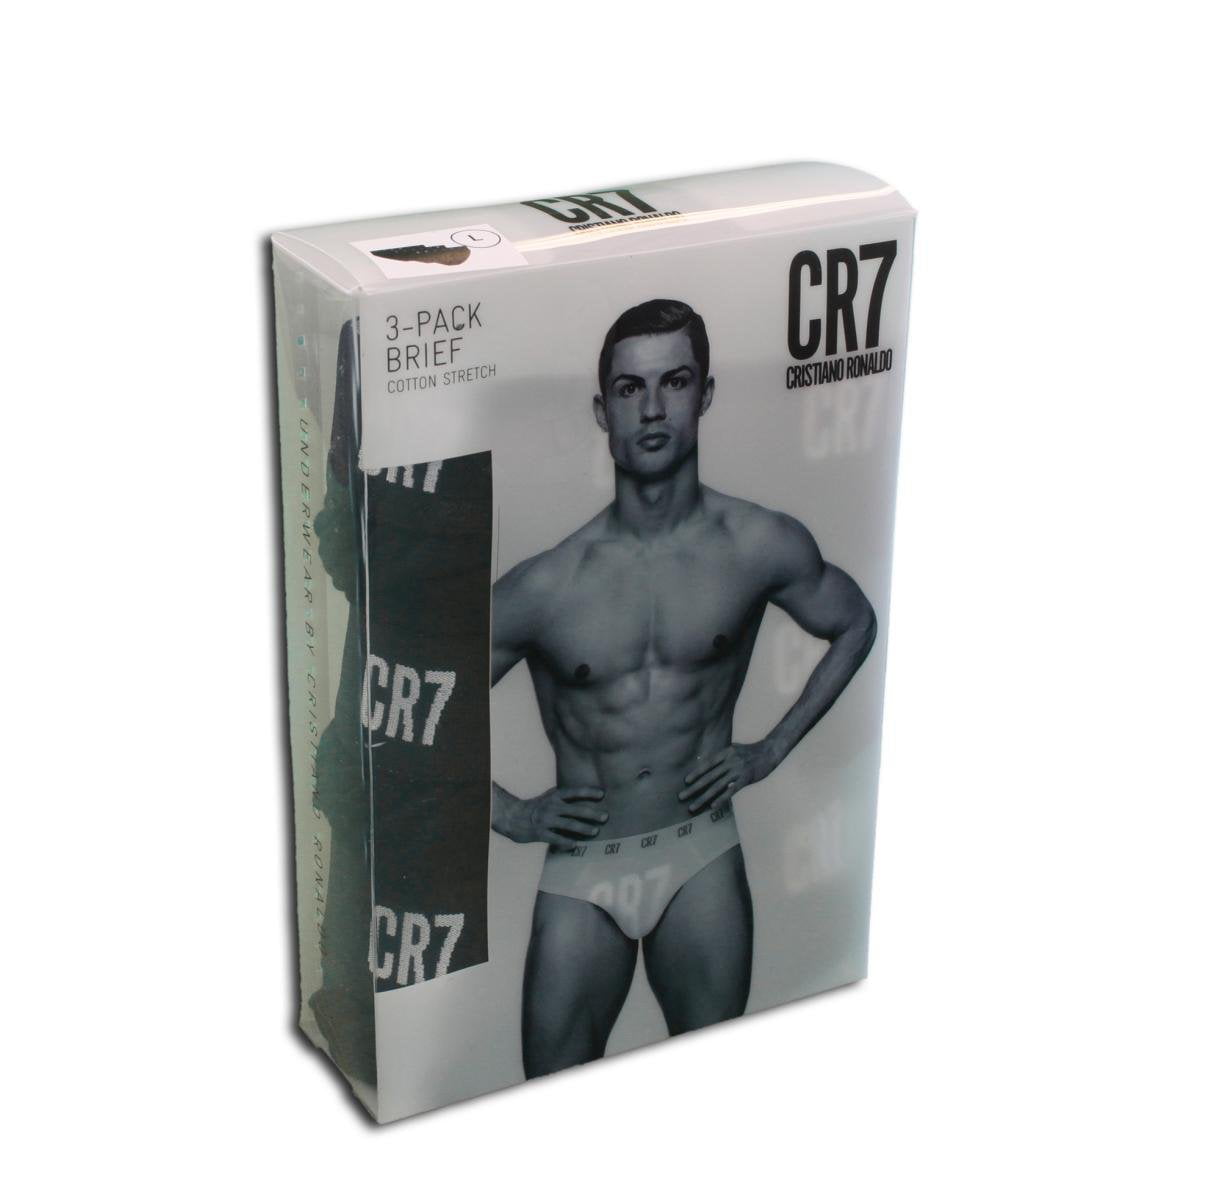 Cristiano Ronaldo CR7 Basic 3-Pack Cotton Briefs Men's Underwear XXL 